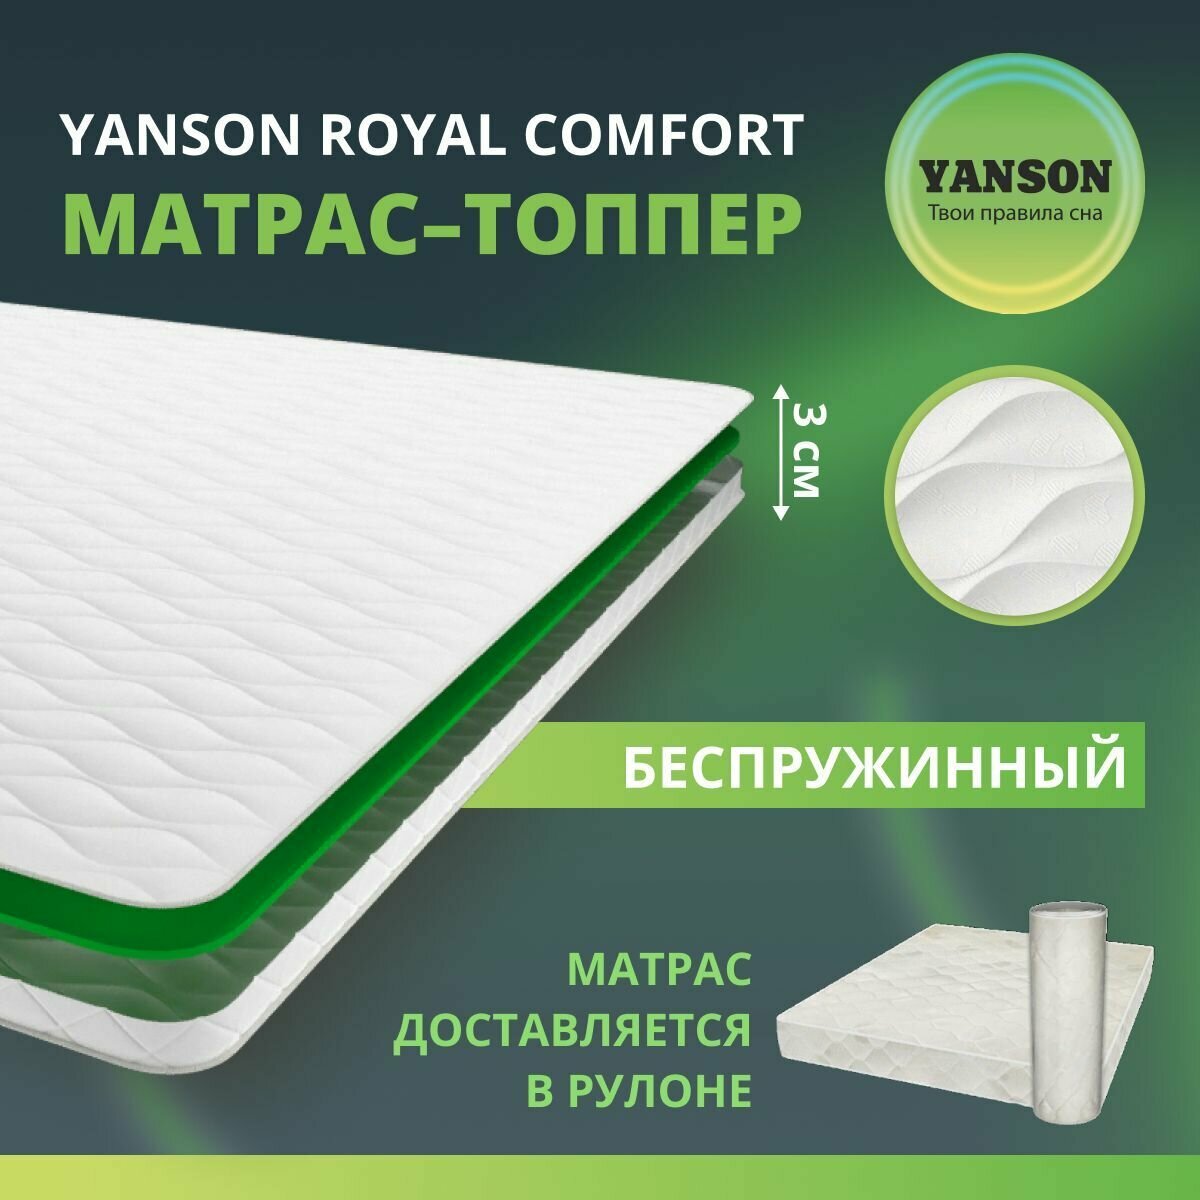 YANSON Royal Comfort 80-190